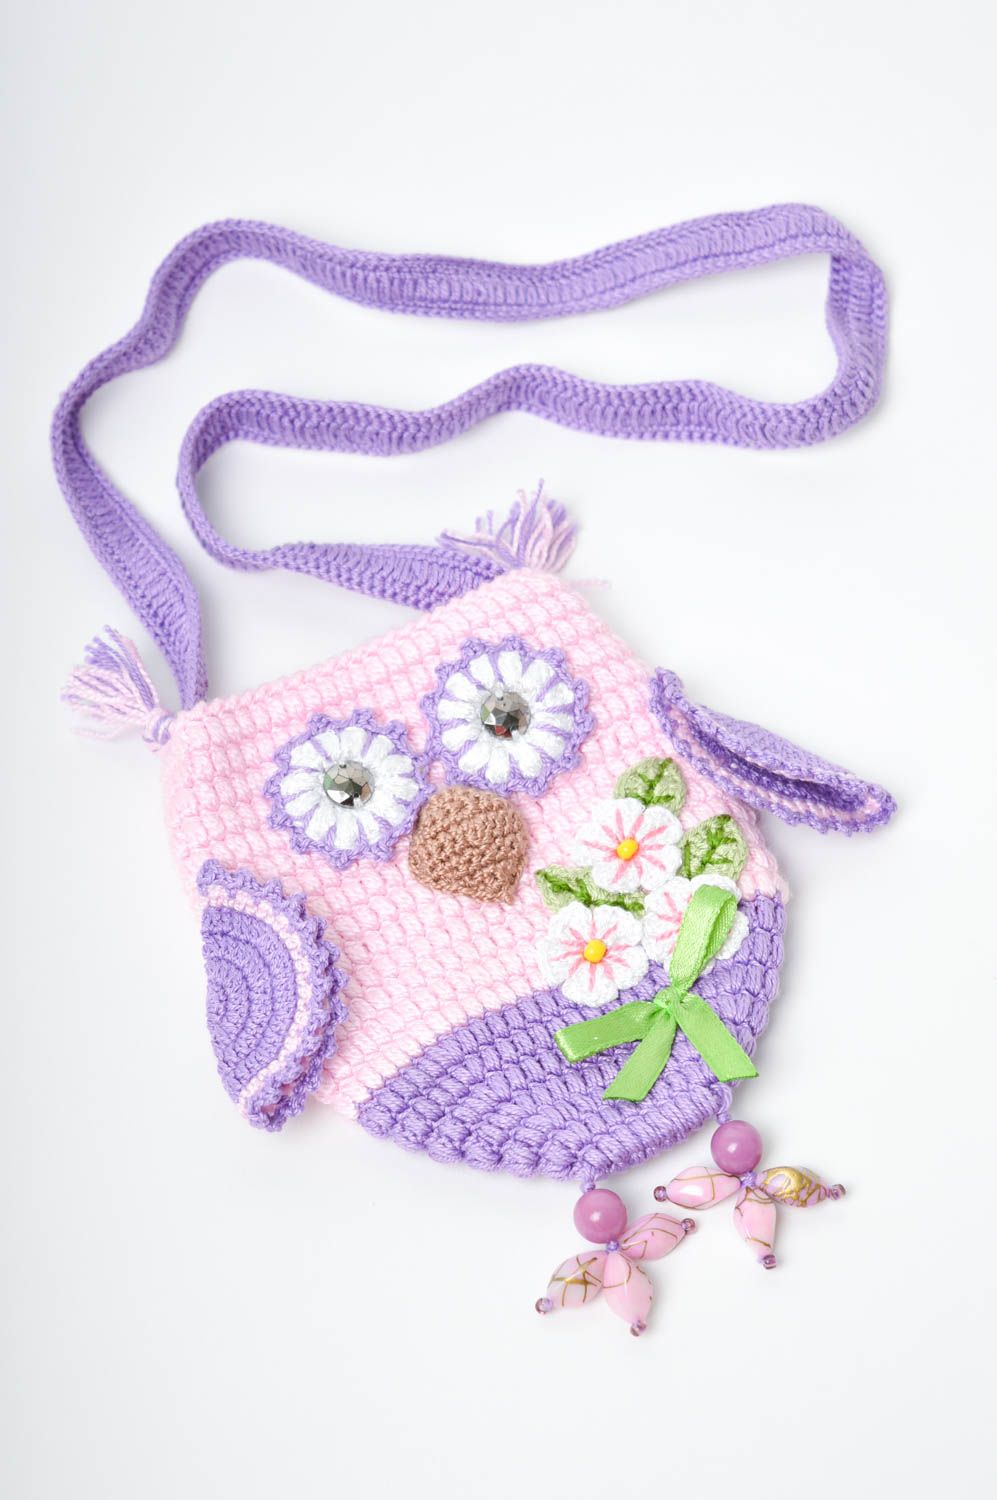 Handmade crochet bag girls bag kids accessories gifts for girls bag for kids photo 2